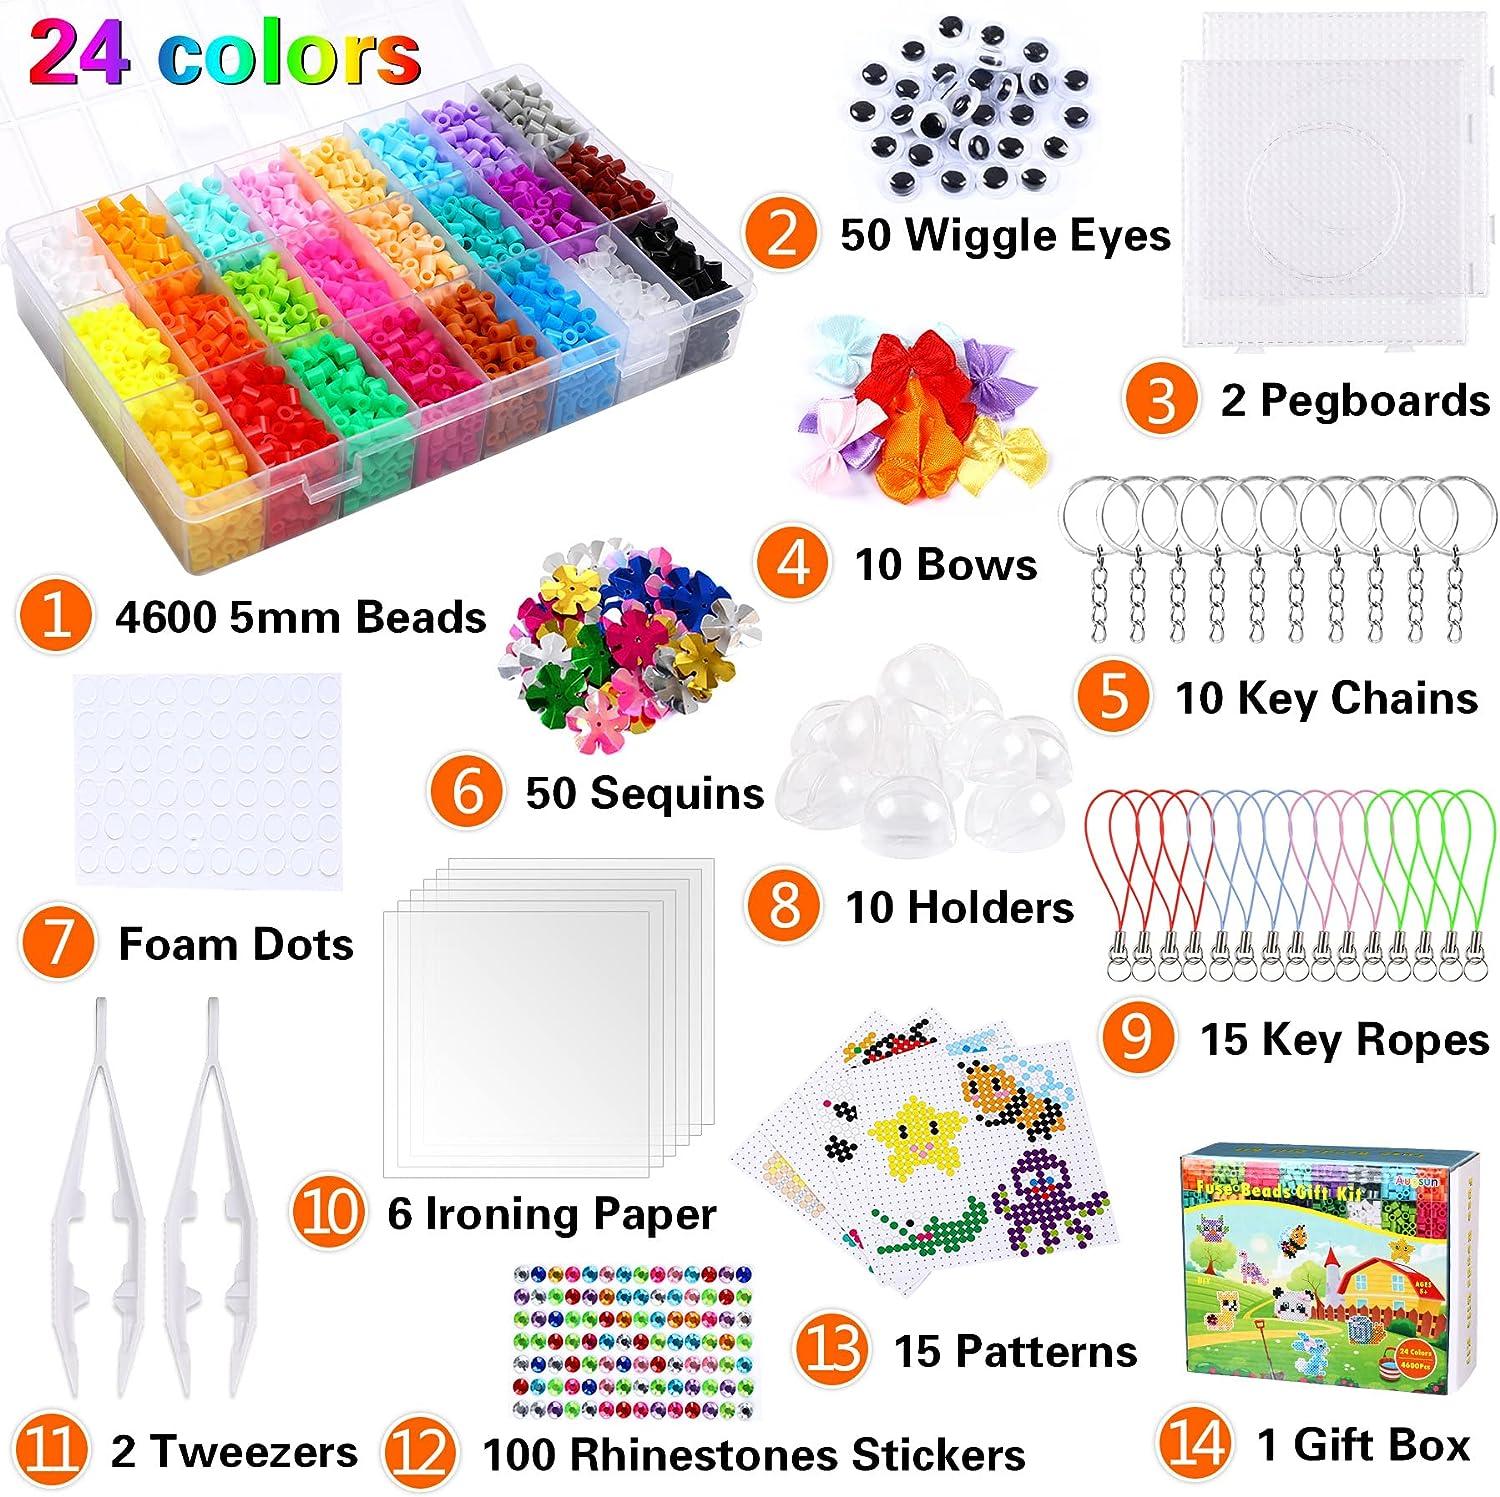 AUGSUN Fuse Beads Kit for Kids, 4600Pcs+ 24 Colors Crafting